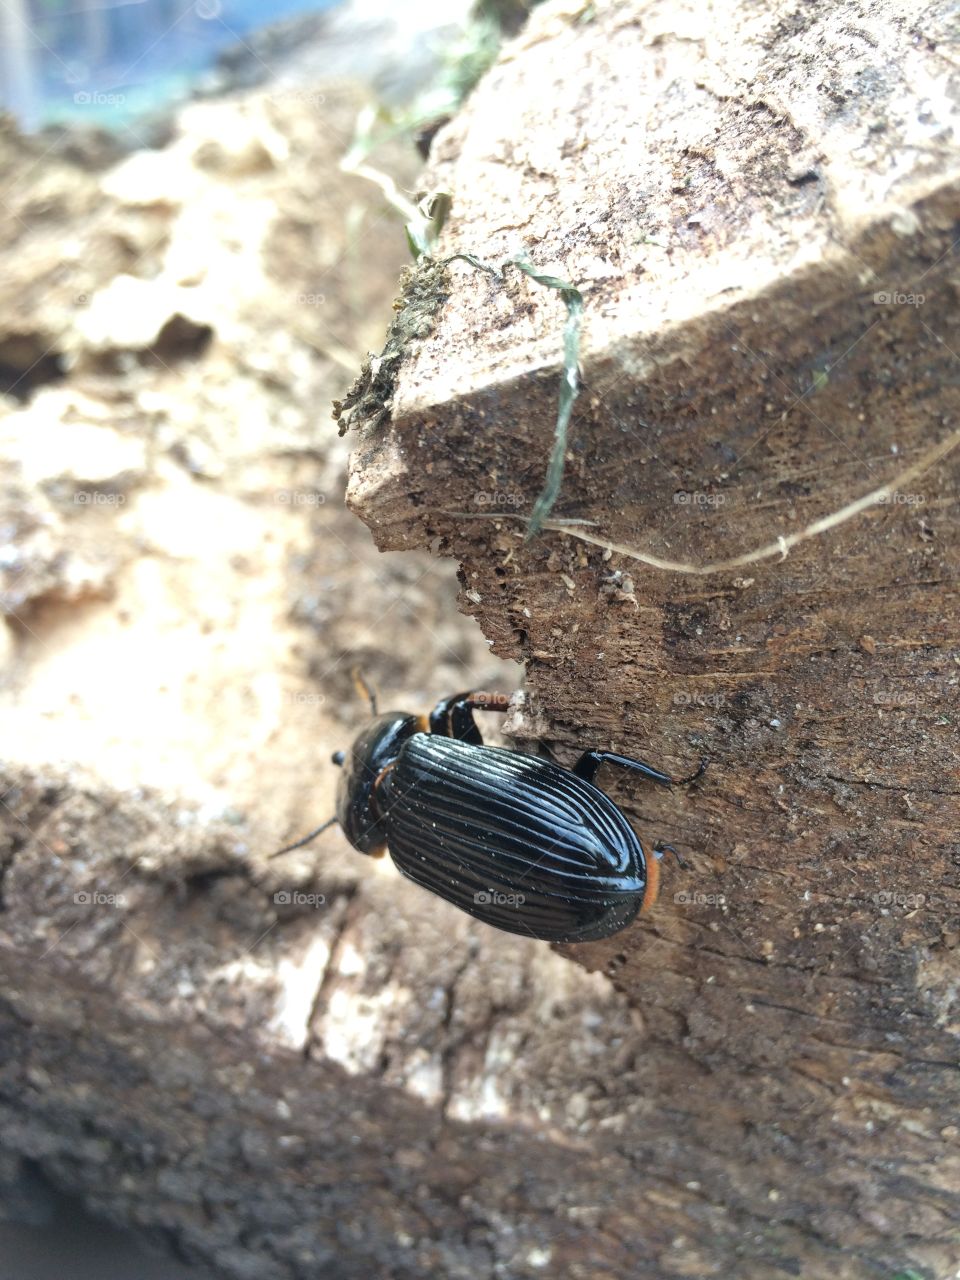 Curious Beetle